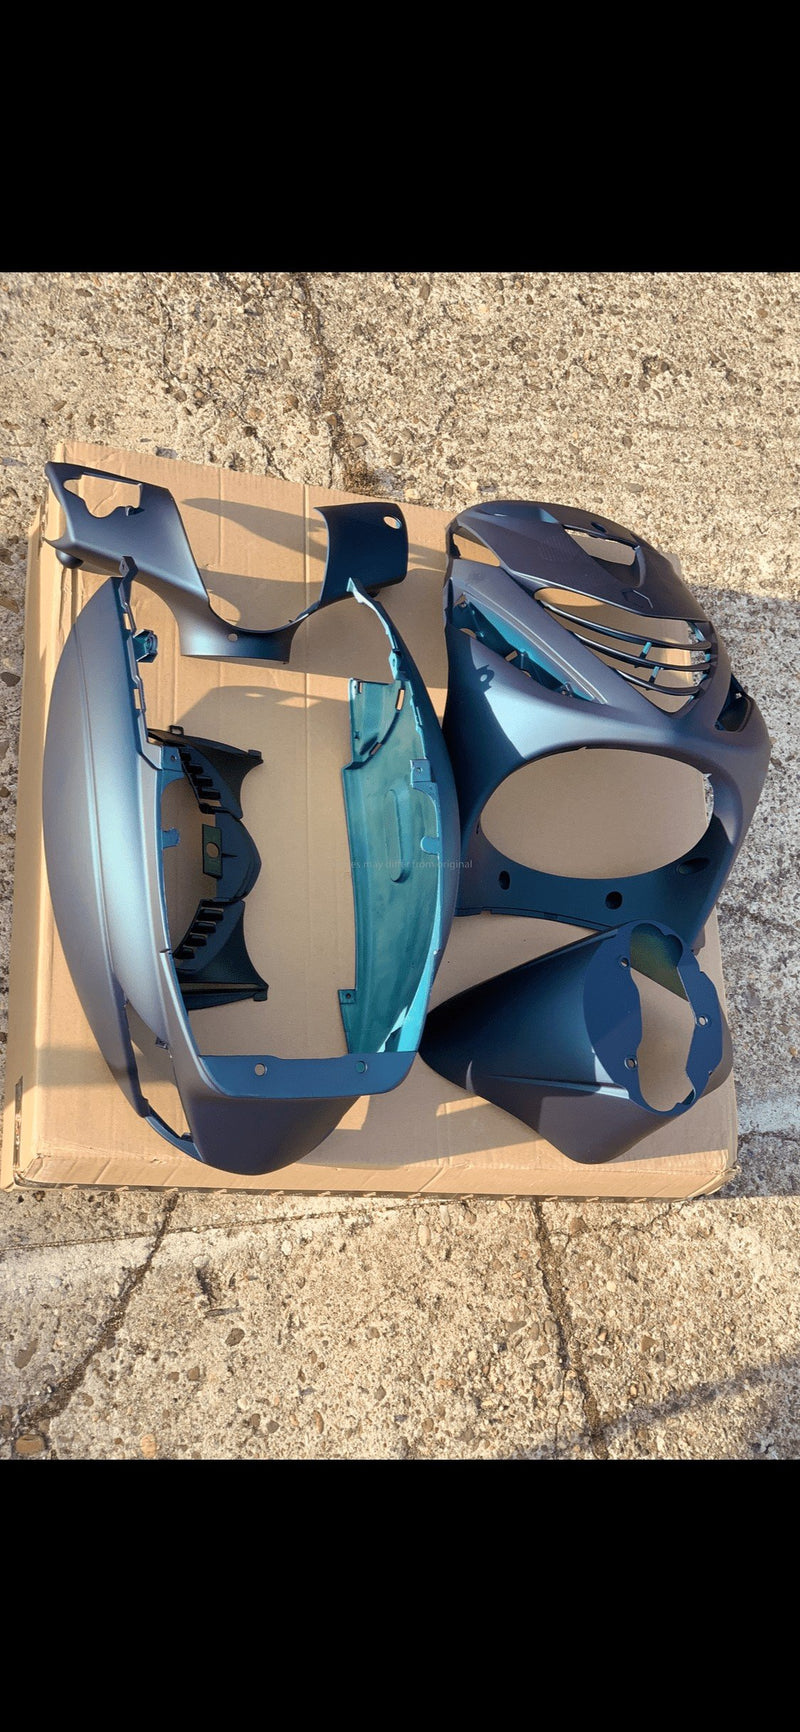 Panel Kit SP Matt Dark Blue Chameleon | Piaggio Zip 2000/SP Models Falan Parts 159.95 Falan Parts